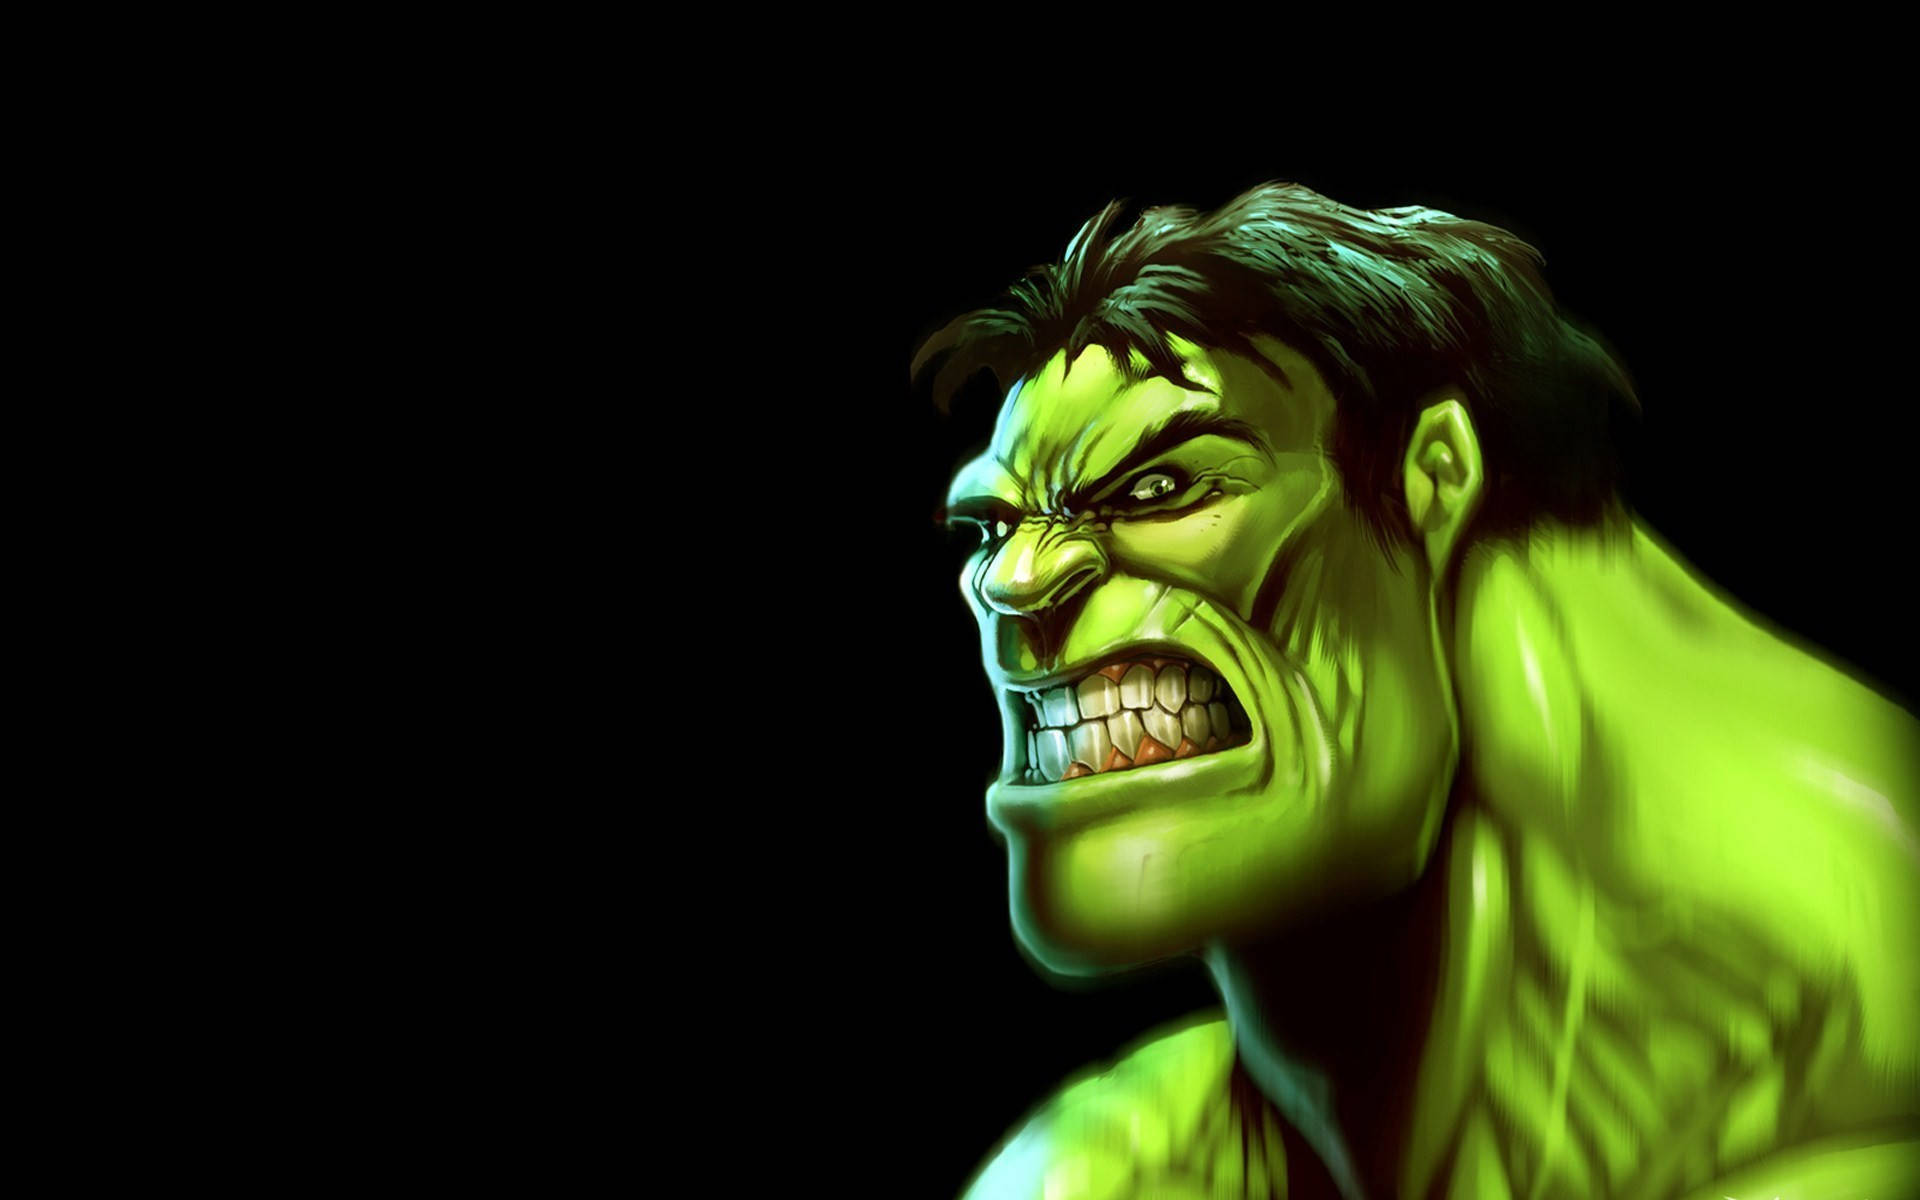 The Hulk Graphic Fan Art Background